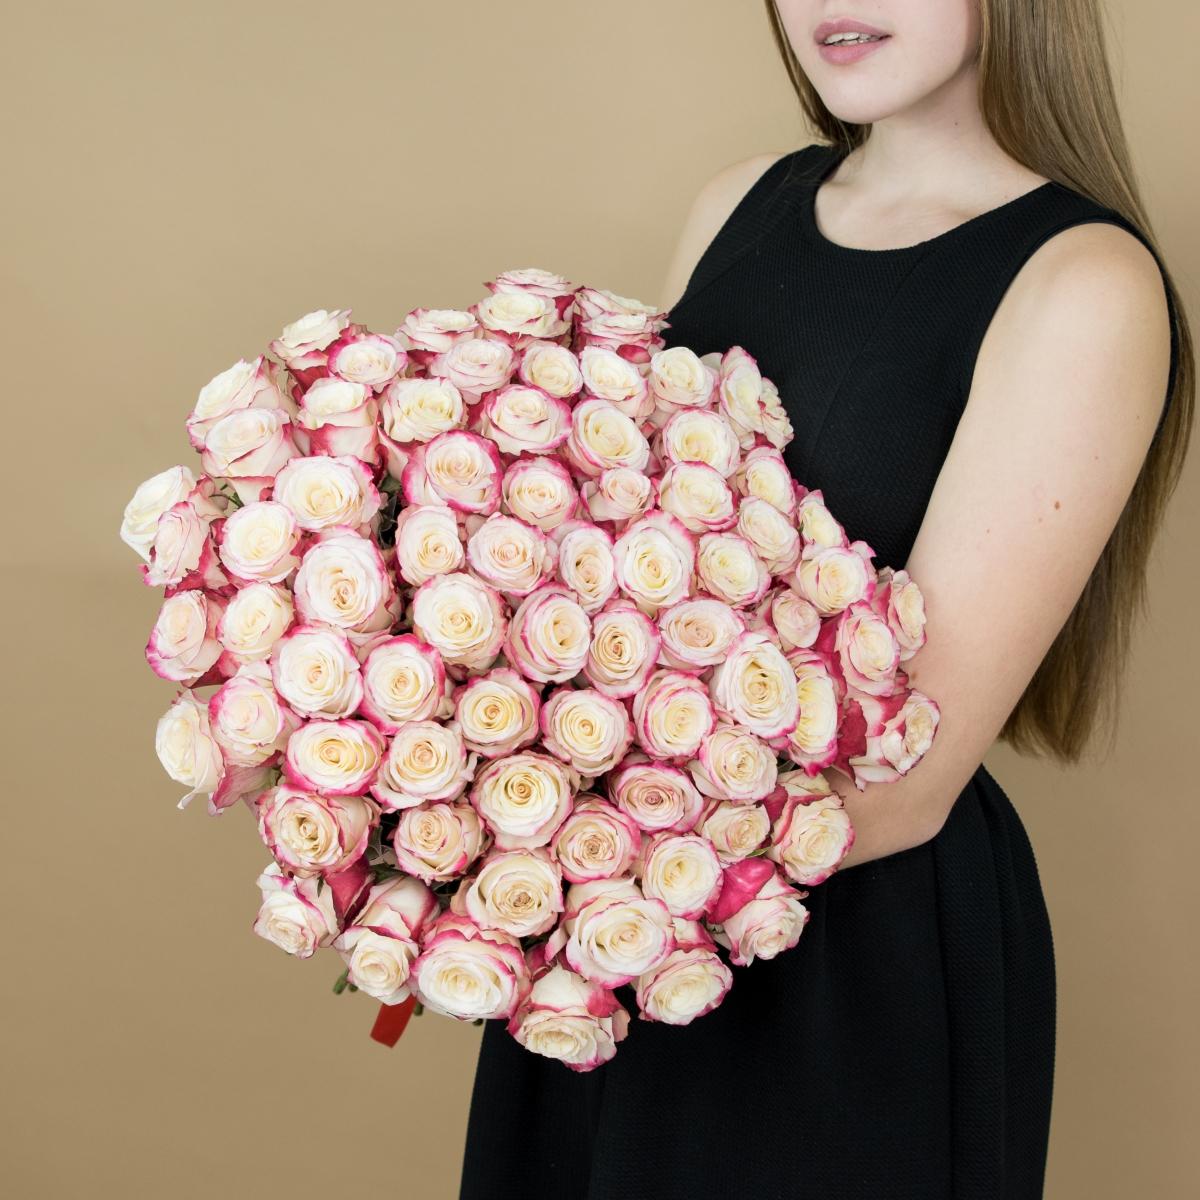 Розы красно-белые 101 шт. (40 см) артикул букета  1602iv